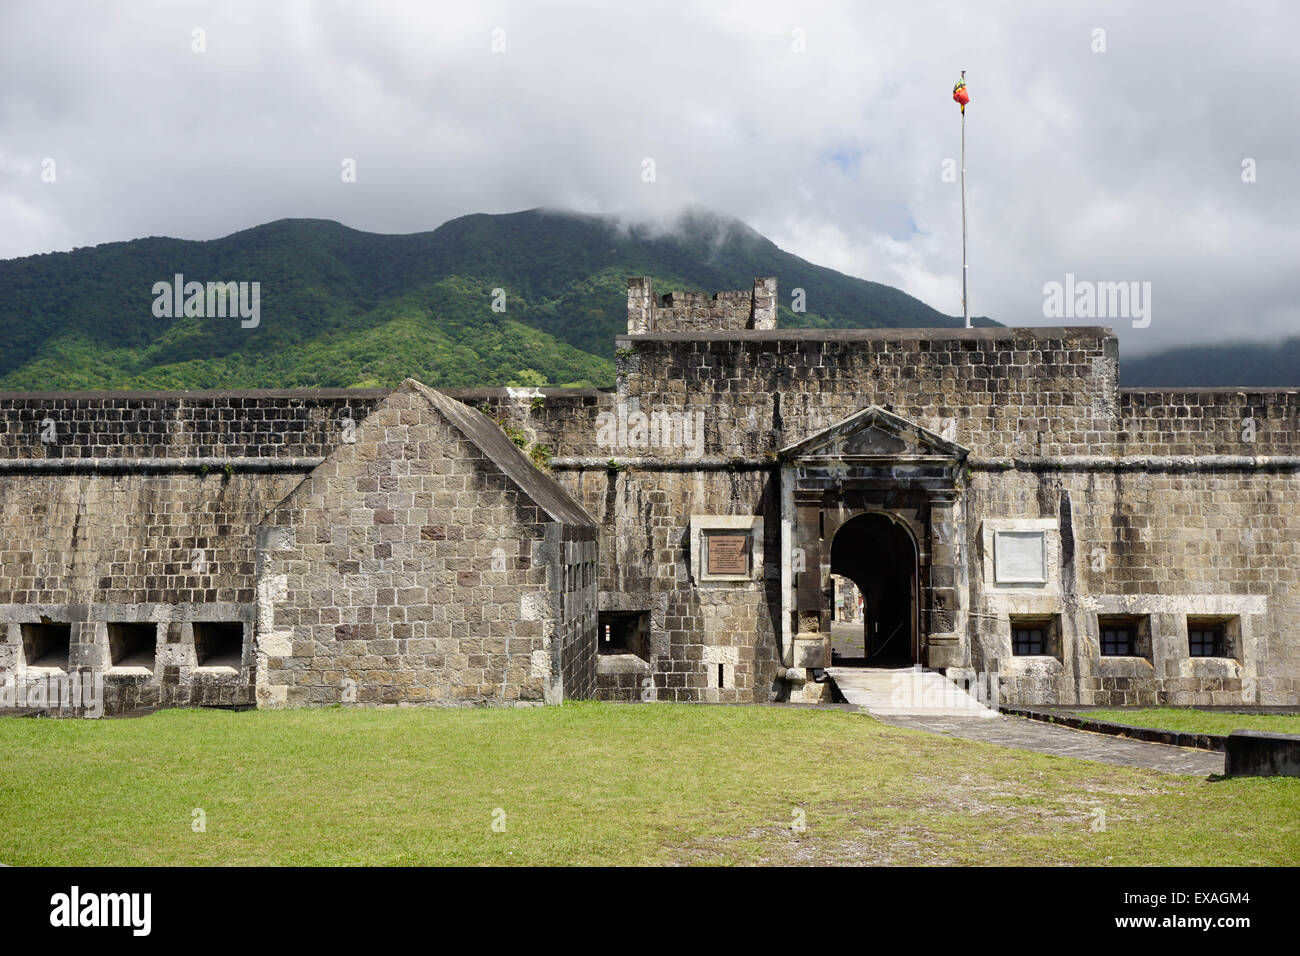 Festung Brimstone Hill, der UNESCO, St. Kitts, St. Kitts und Nevis, Leeward-Inseln, West Indies, Karibik, Mittelamerika Stockfoto